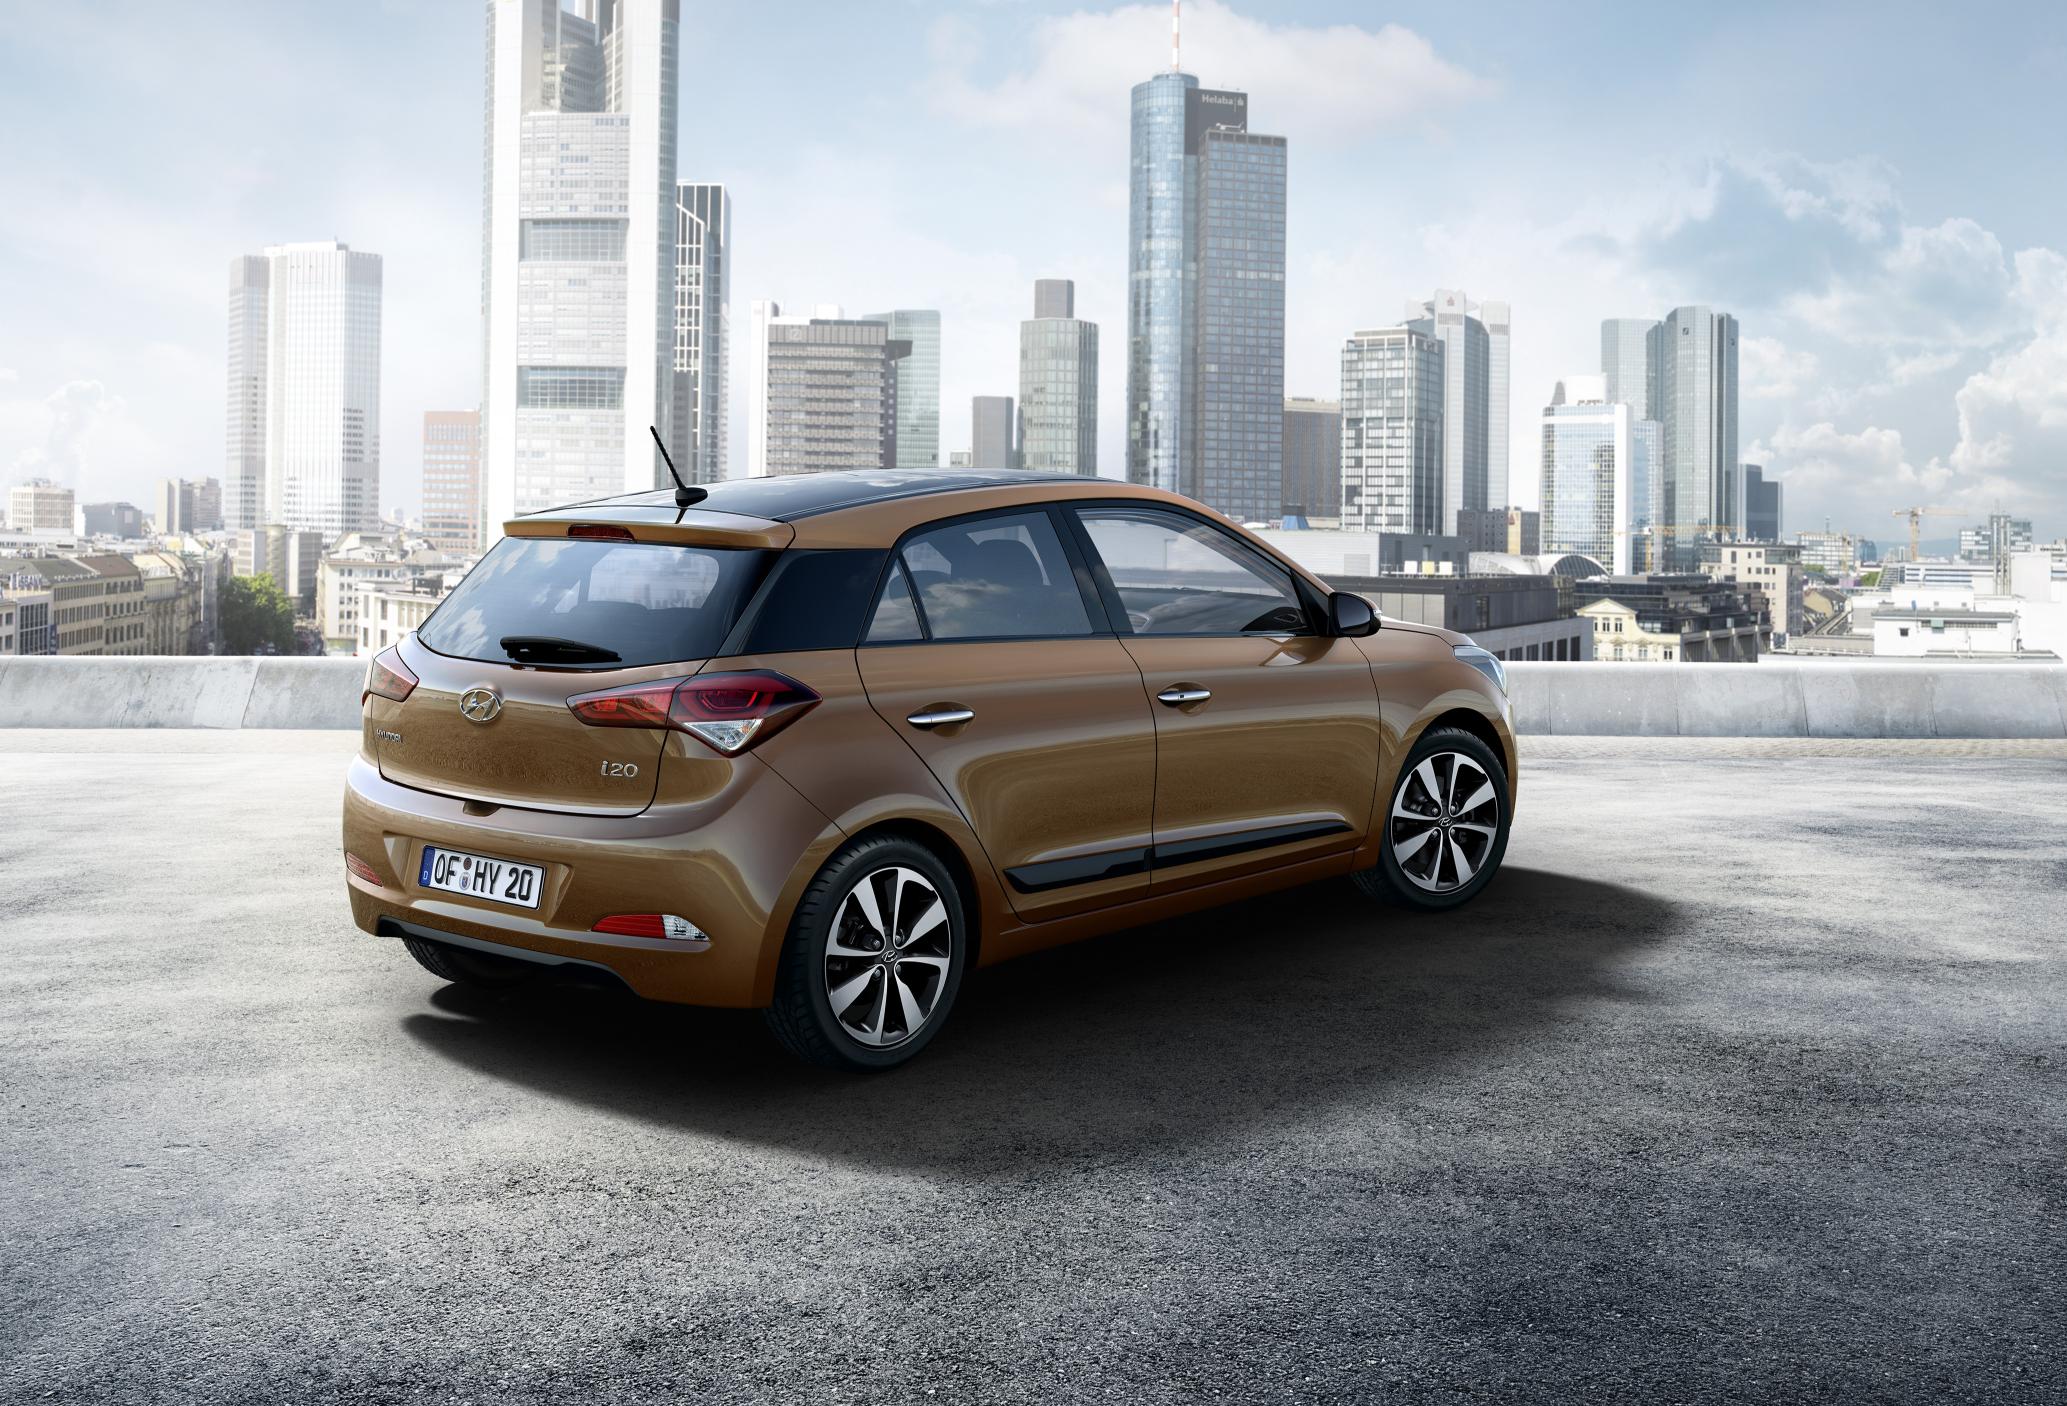 2015 Hyundai i20 Unveiled Ahead of Paris Motor Show [Video] - autoevolution